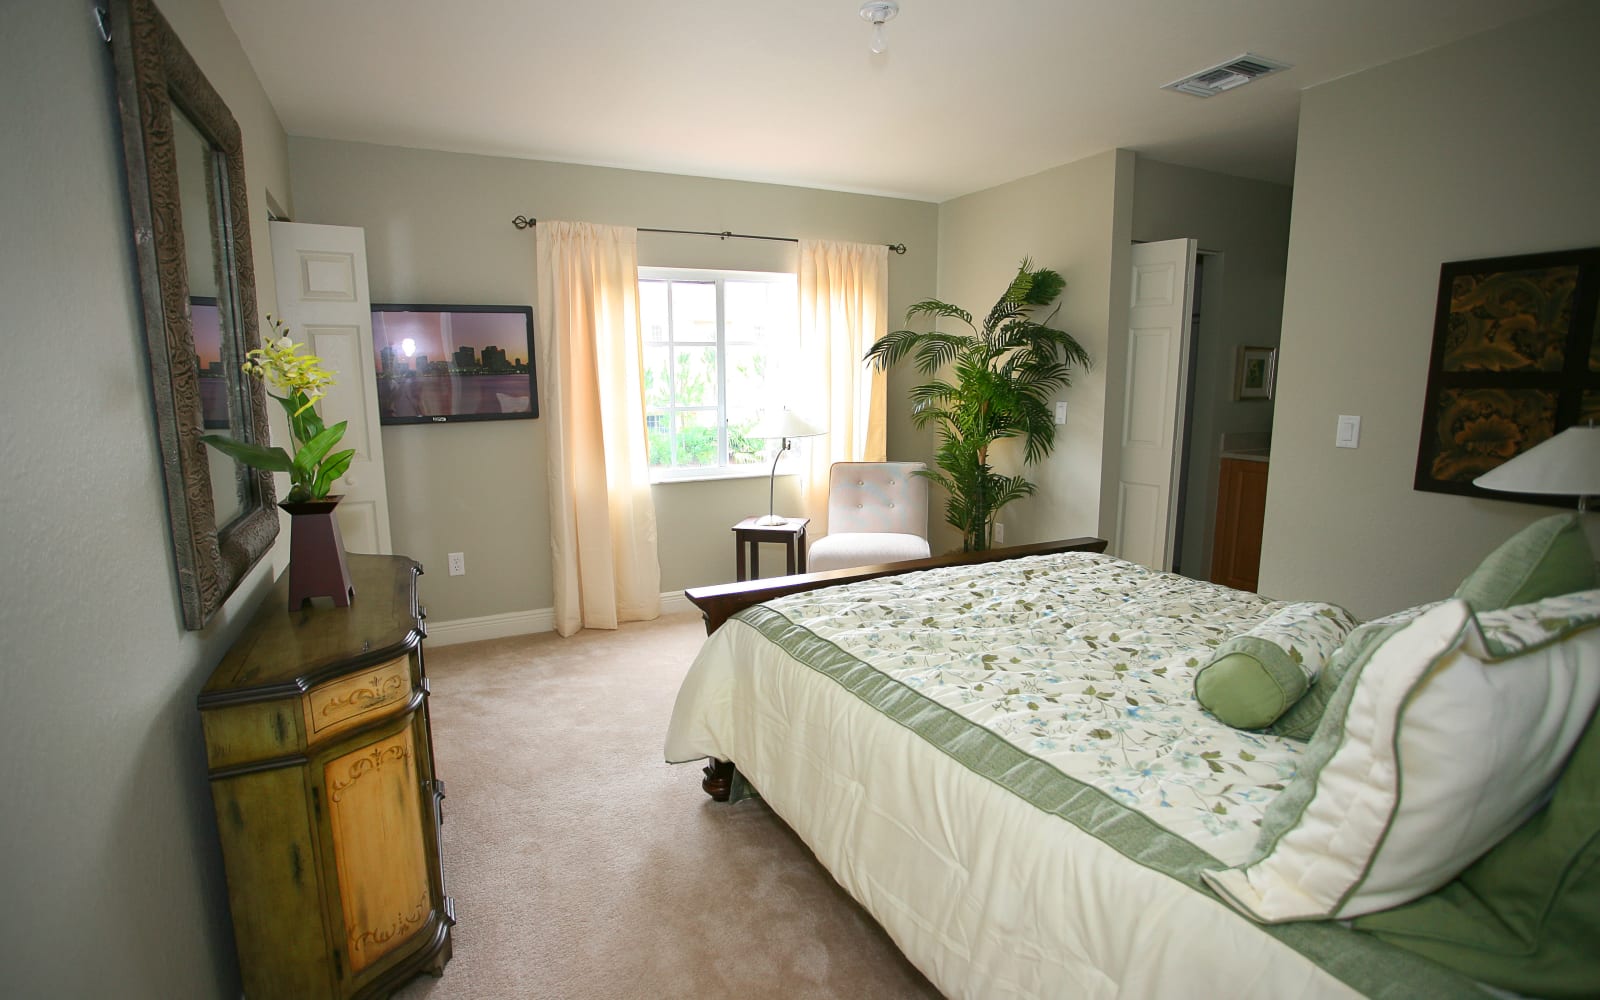 Model Bedroom at Green Cay Village in Boynton Beach, Florida